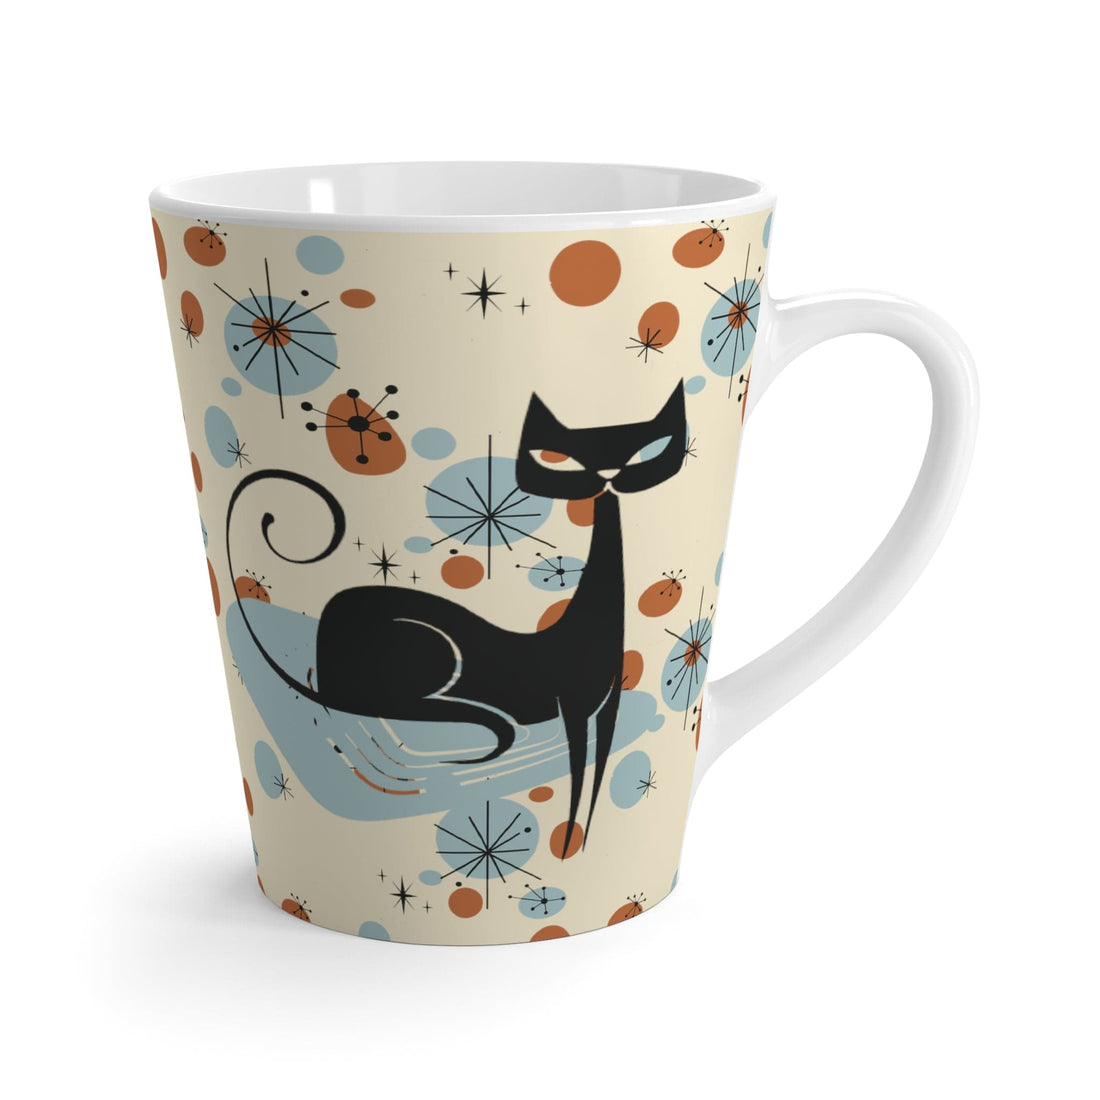 Kate McEnroe New York Retro Atomic Cat Latte Mug, Mid Century Modern Kitchenware, MCM Starburst Coffee Cup, Vintage Style DrinkwareMugs80894656904421399845